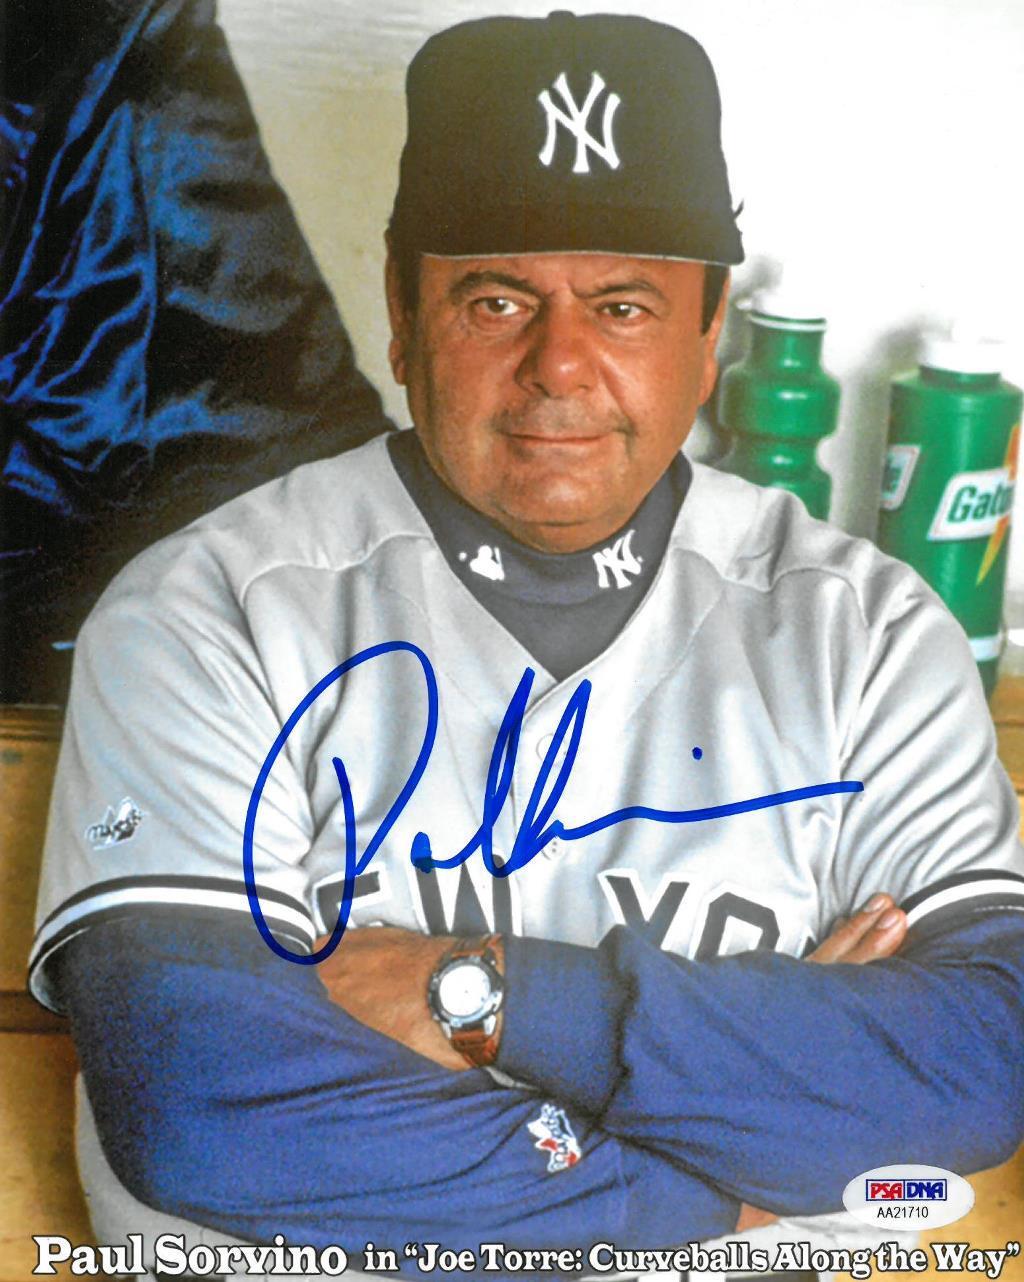 Paul Sorvino Signed Joe Torre: Curveballs Autographed 8x10 Photo Poster painting PSA/DNA#AA21710